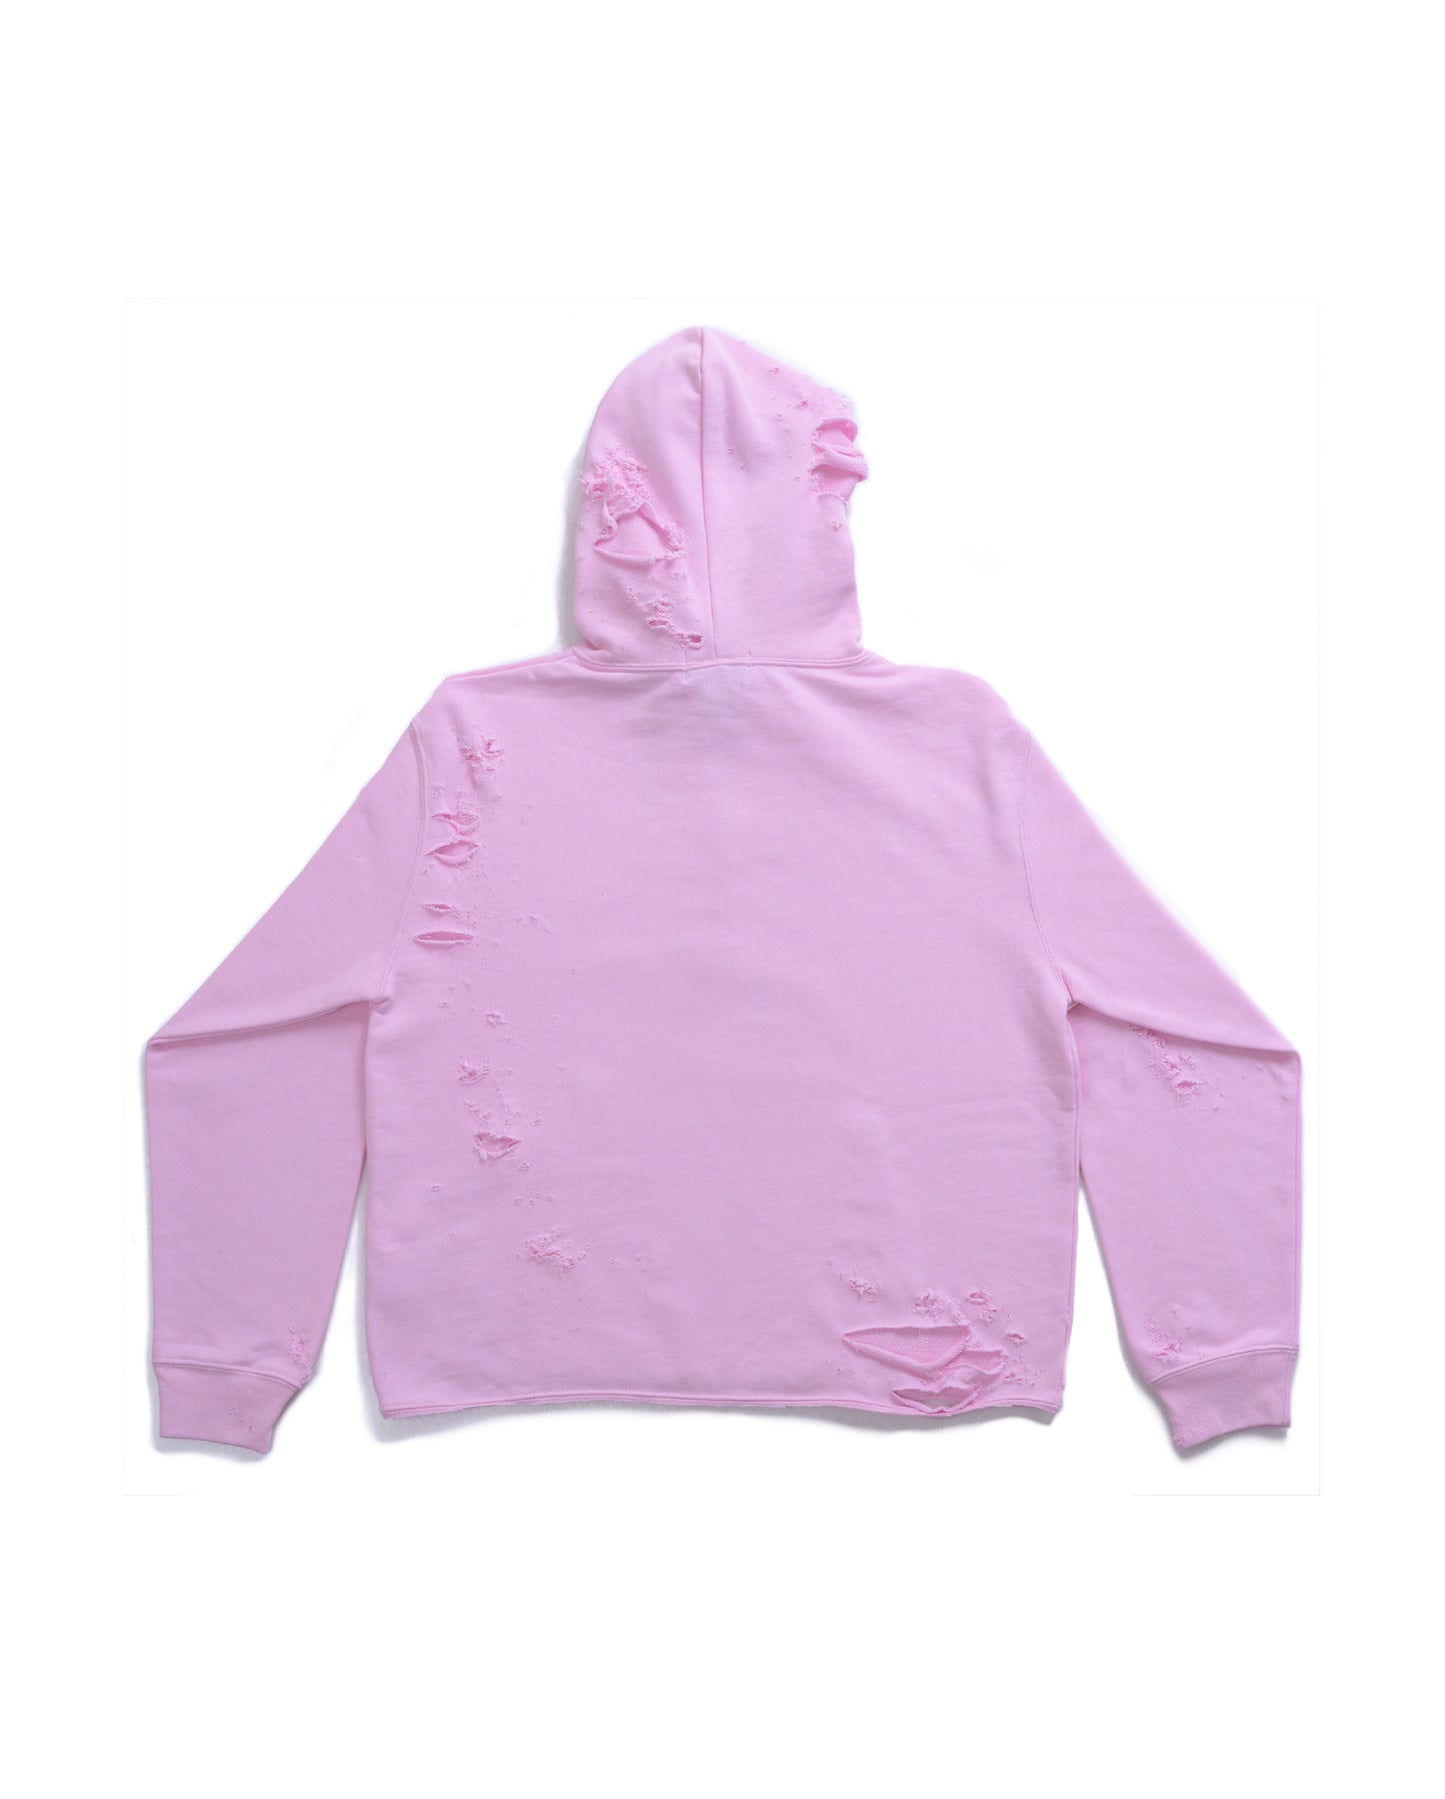 Extra Damaged Hoodie (Pink)